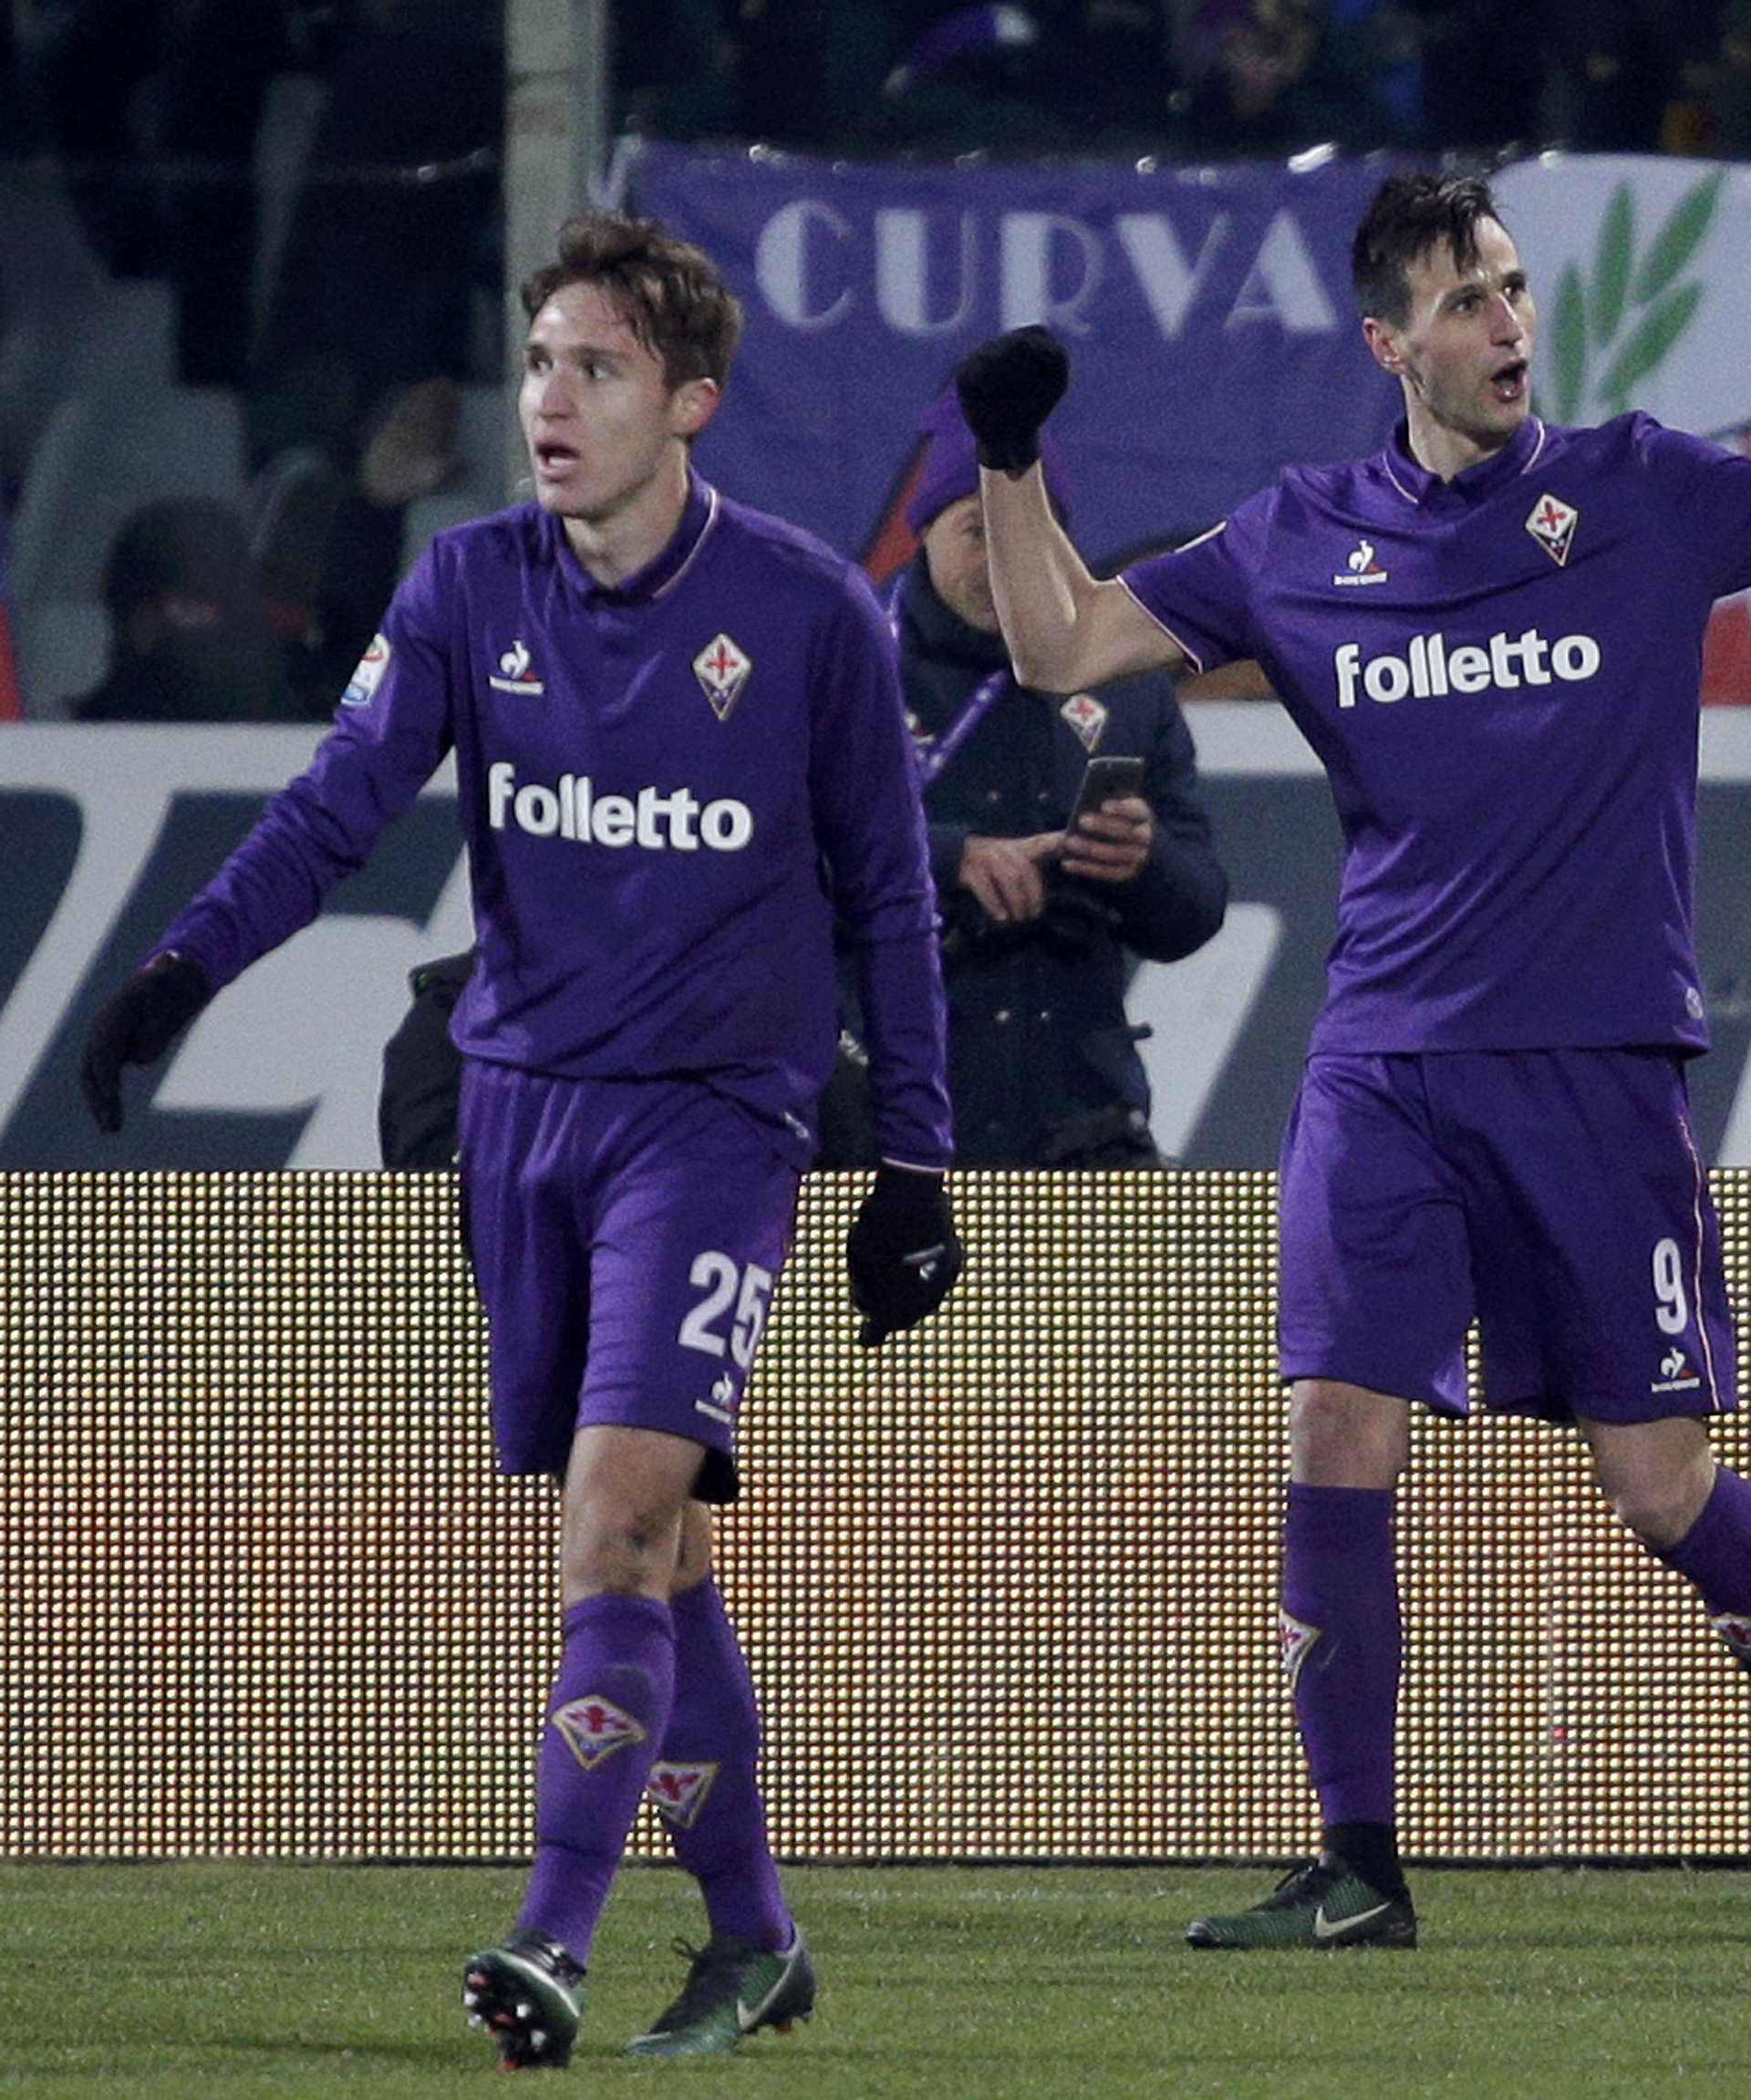 Football Soccer - Fiorentina v Juventus - Italian Serie A